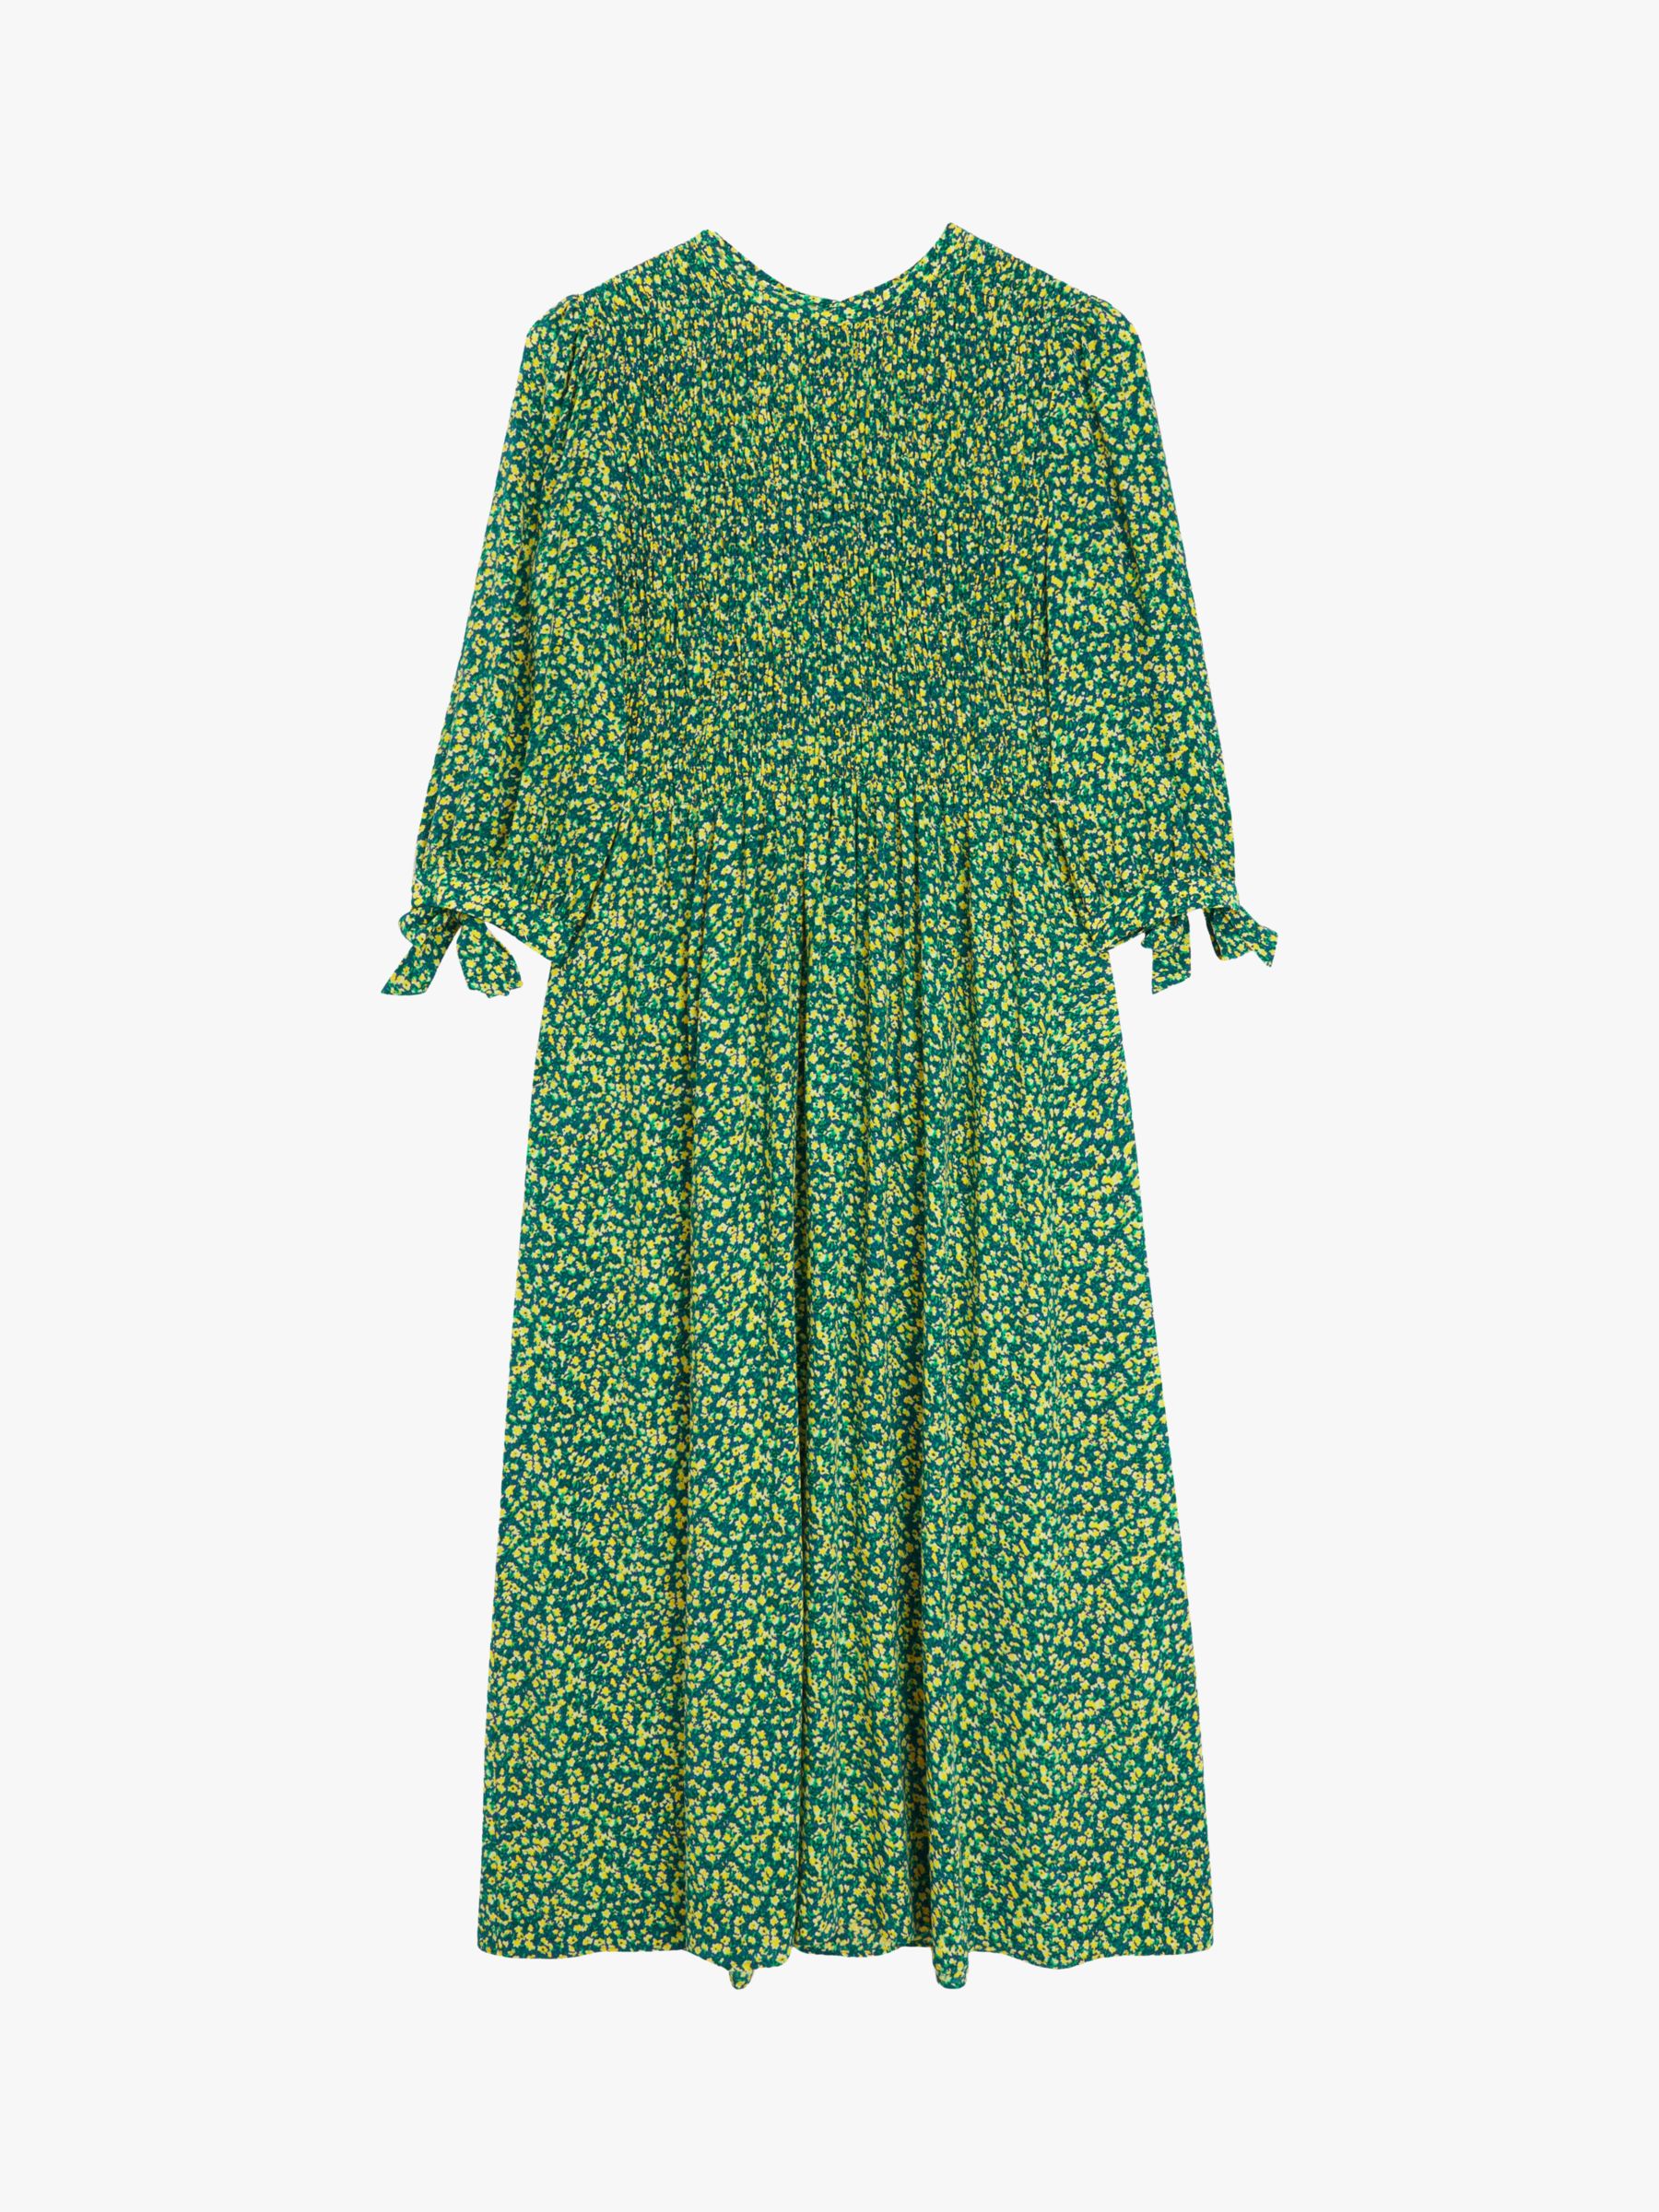 Whistles Ditsy Sunflower Print Midi Dress, Green/Multi at John